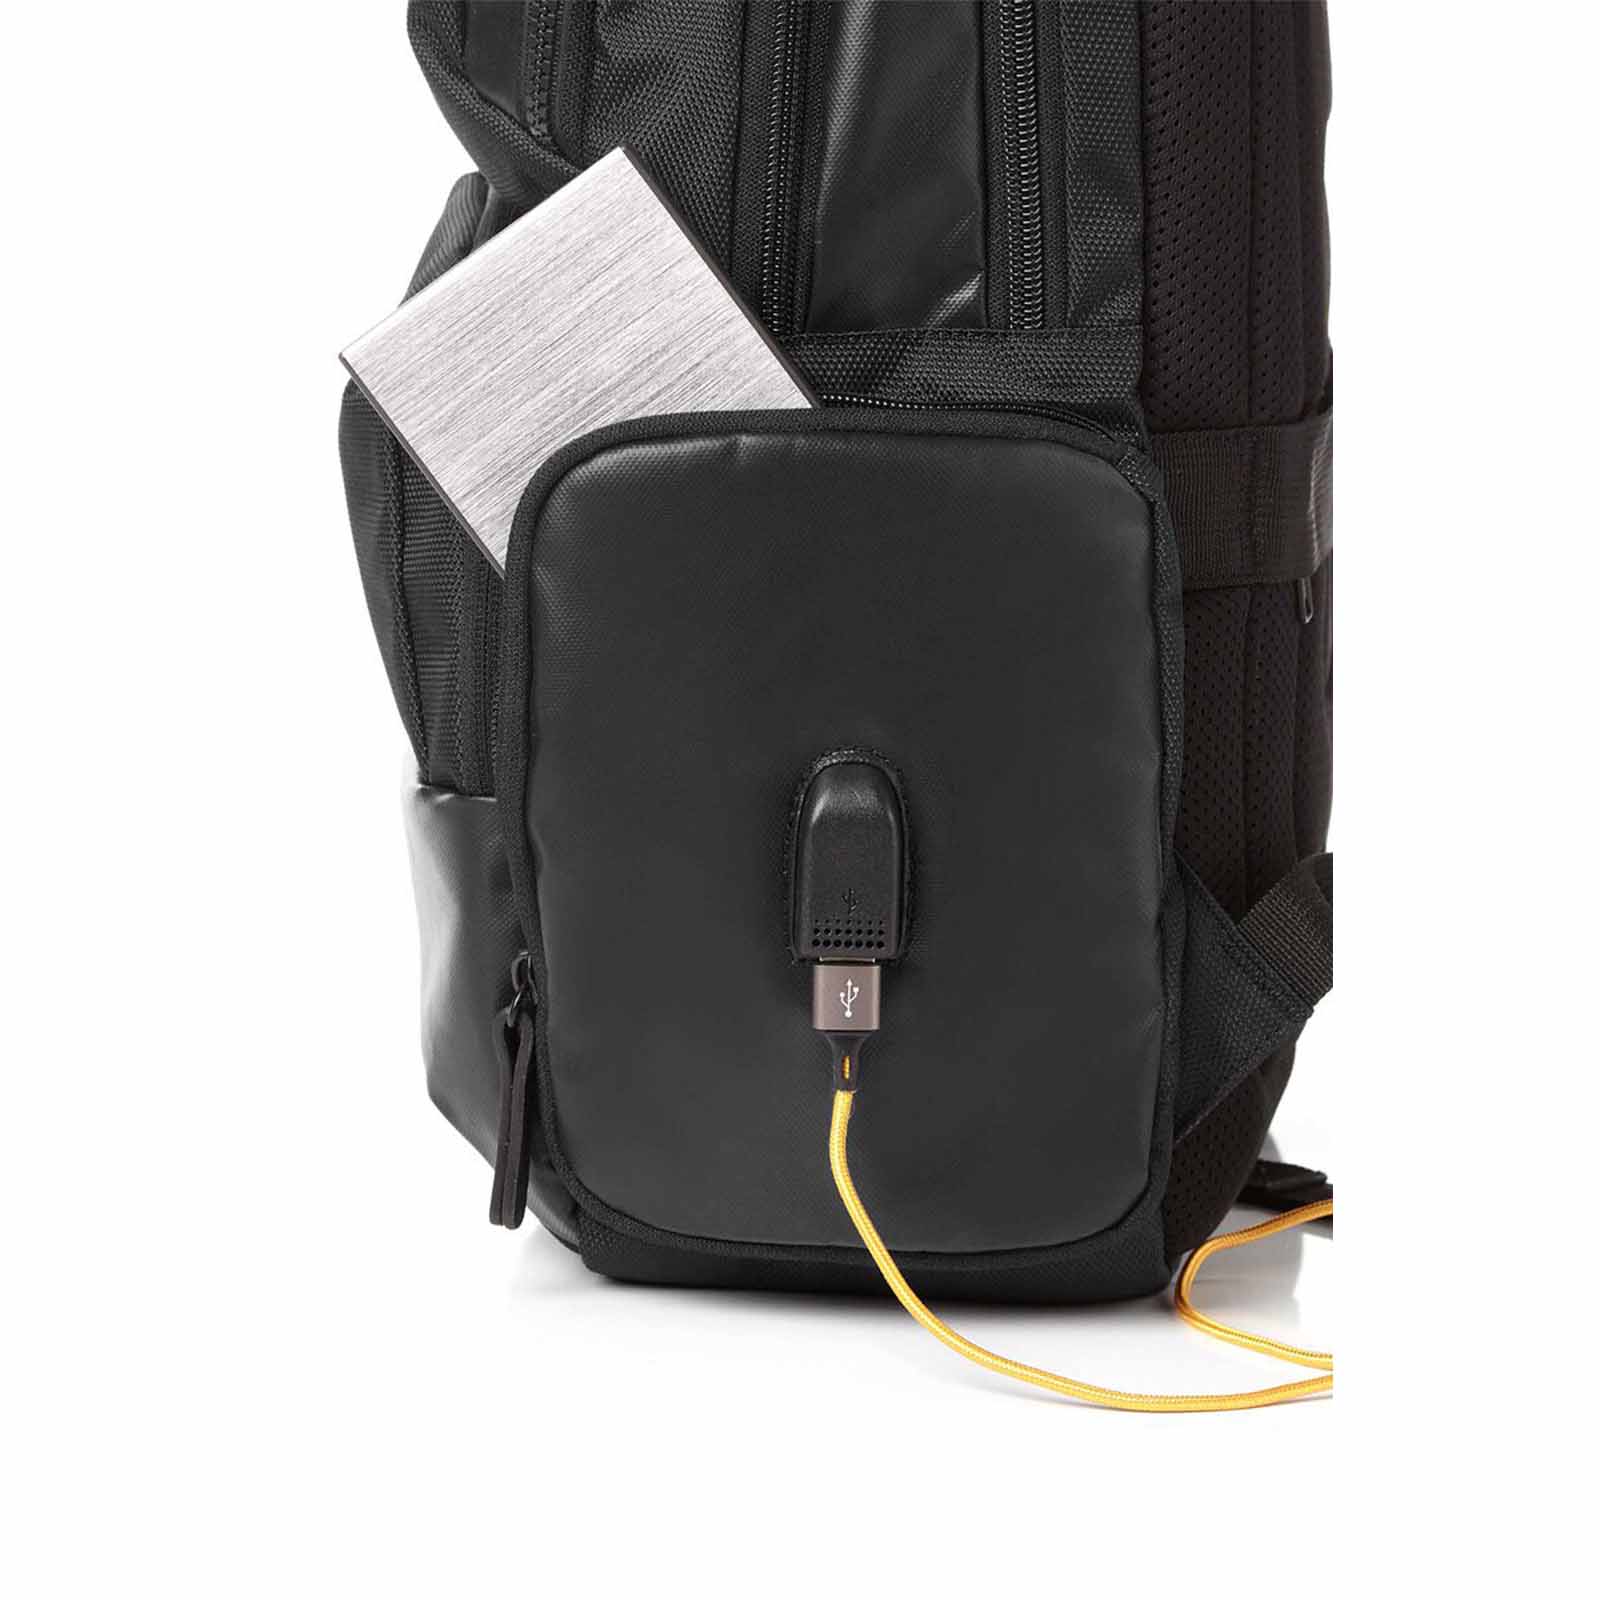 American-Tourister-Zork-15-Inch-Laptop-Backpack-Black-USB-Port